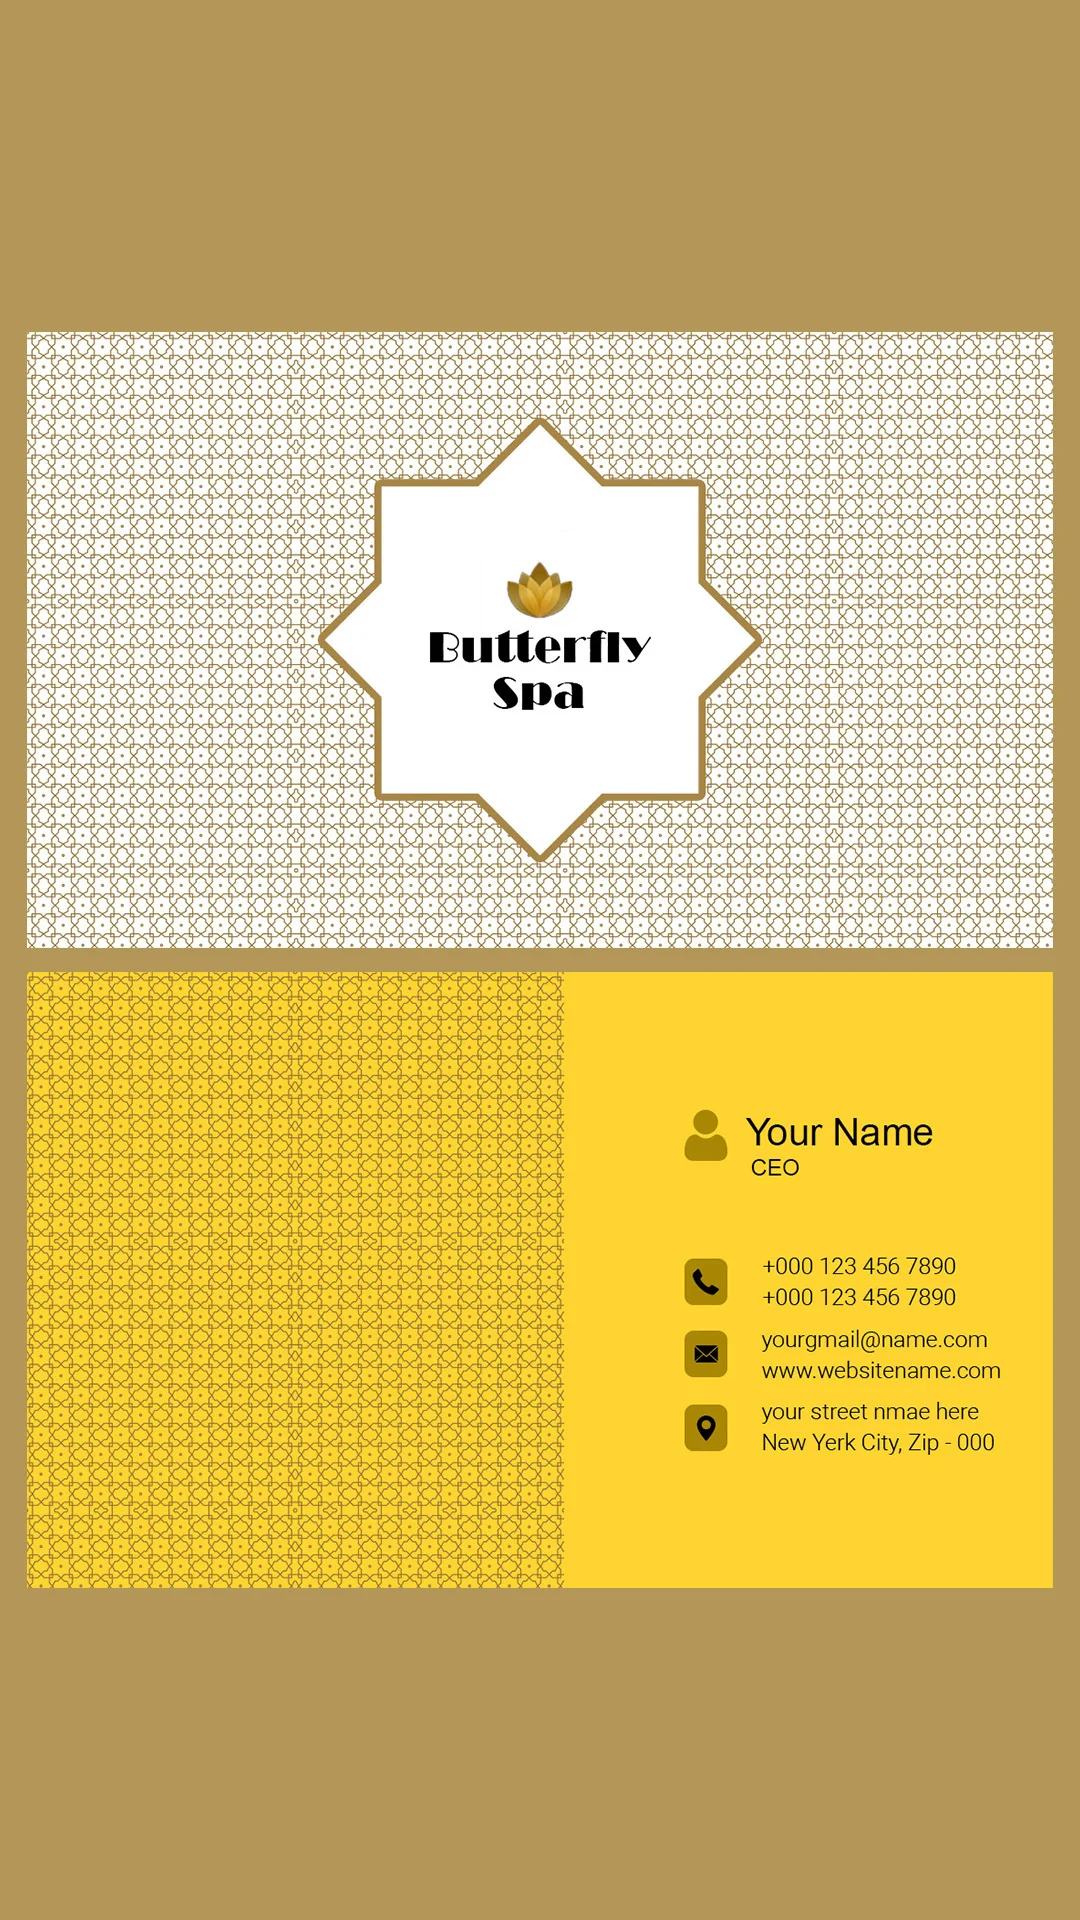 Digitalposh Free PSD - Minimal Yellow background design business cards for Spa